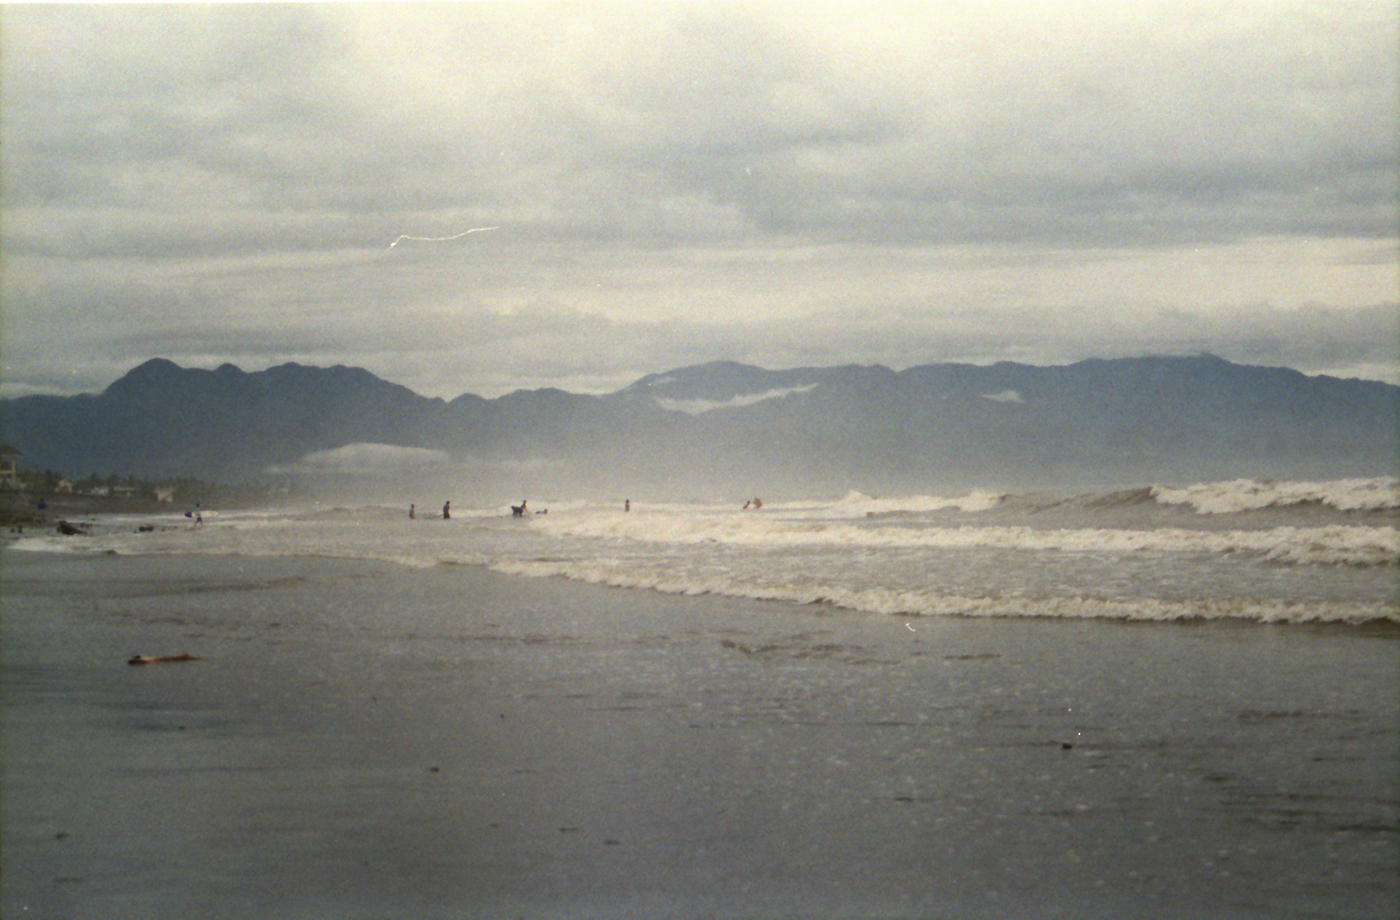 film photography 35mm beach tropics